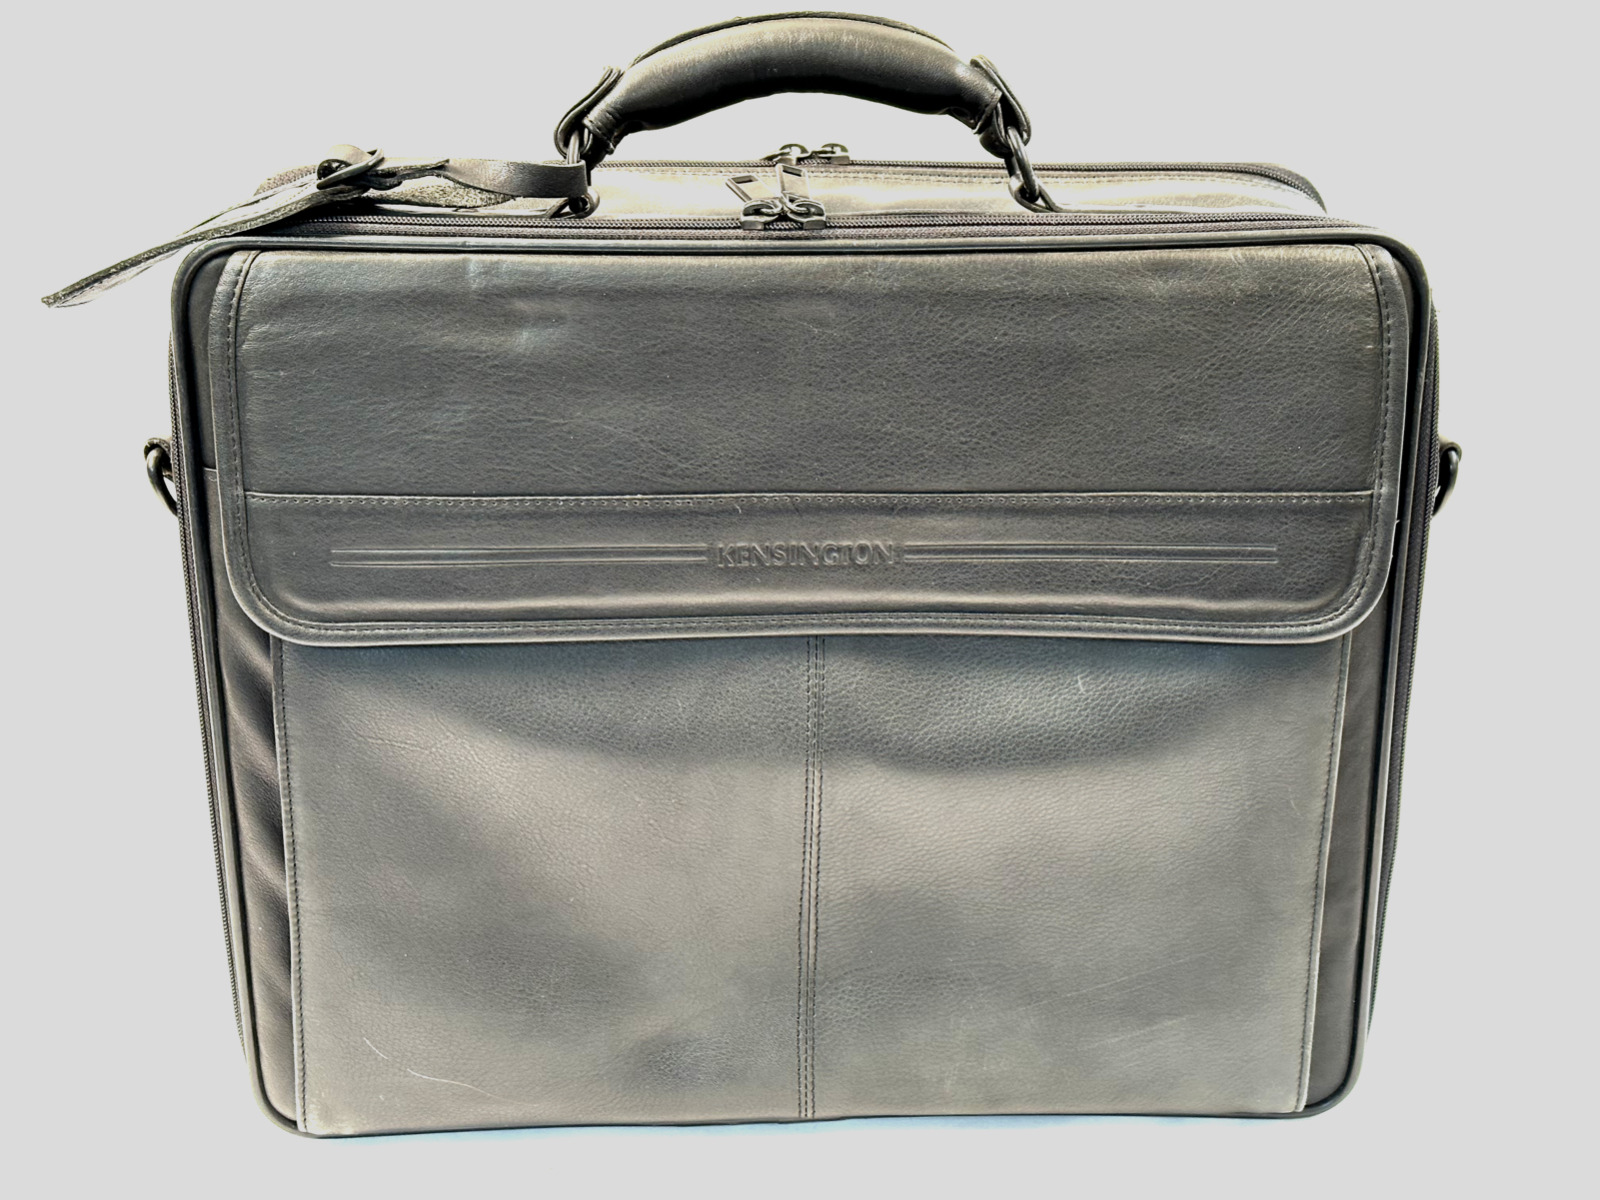 Vintage Kensington Black Leather Multi Compartment Laptop Traveler Carrying Case